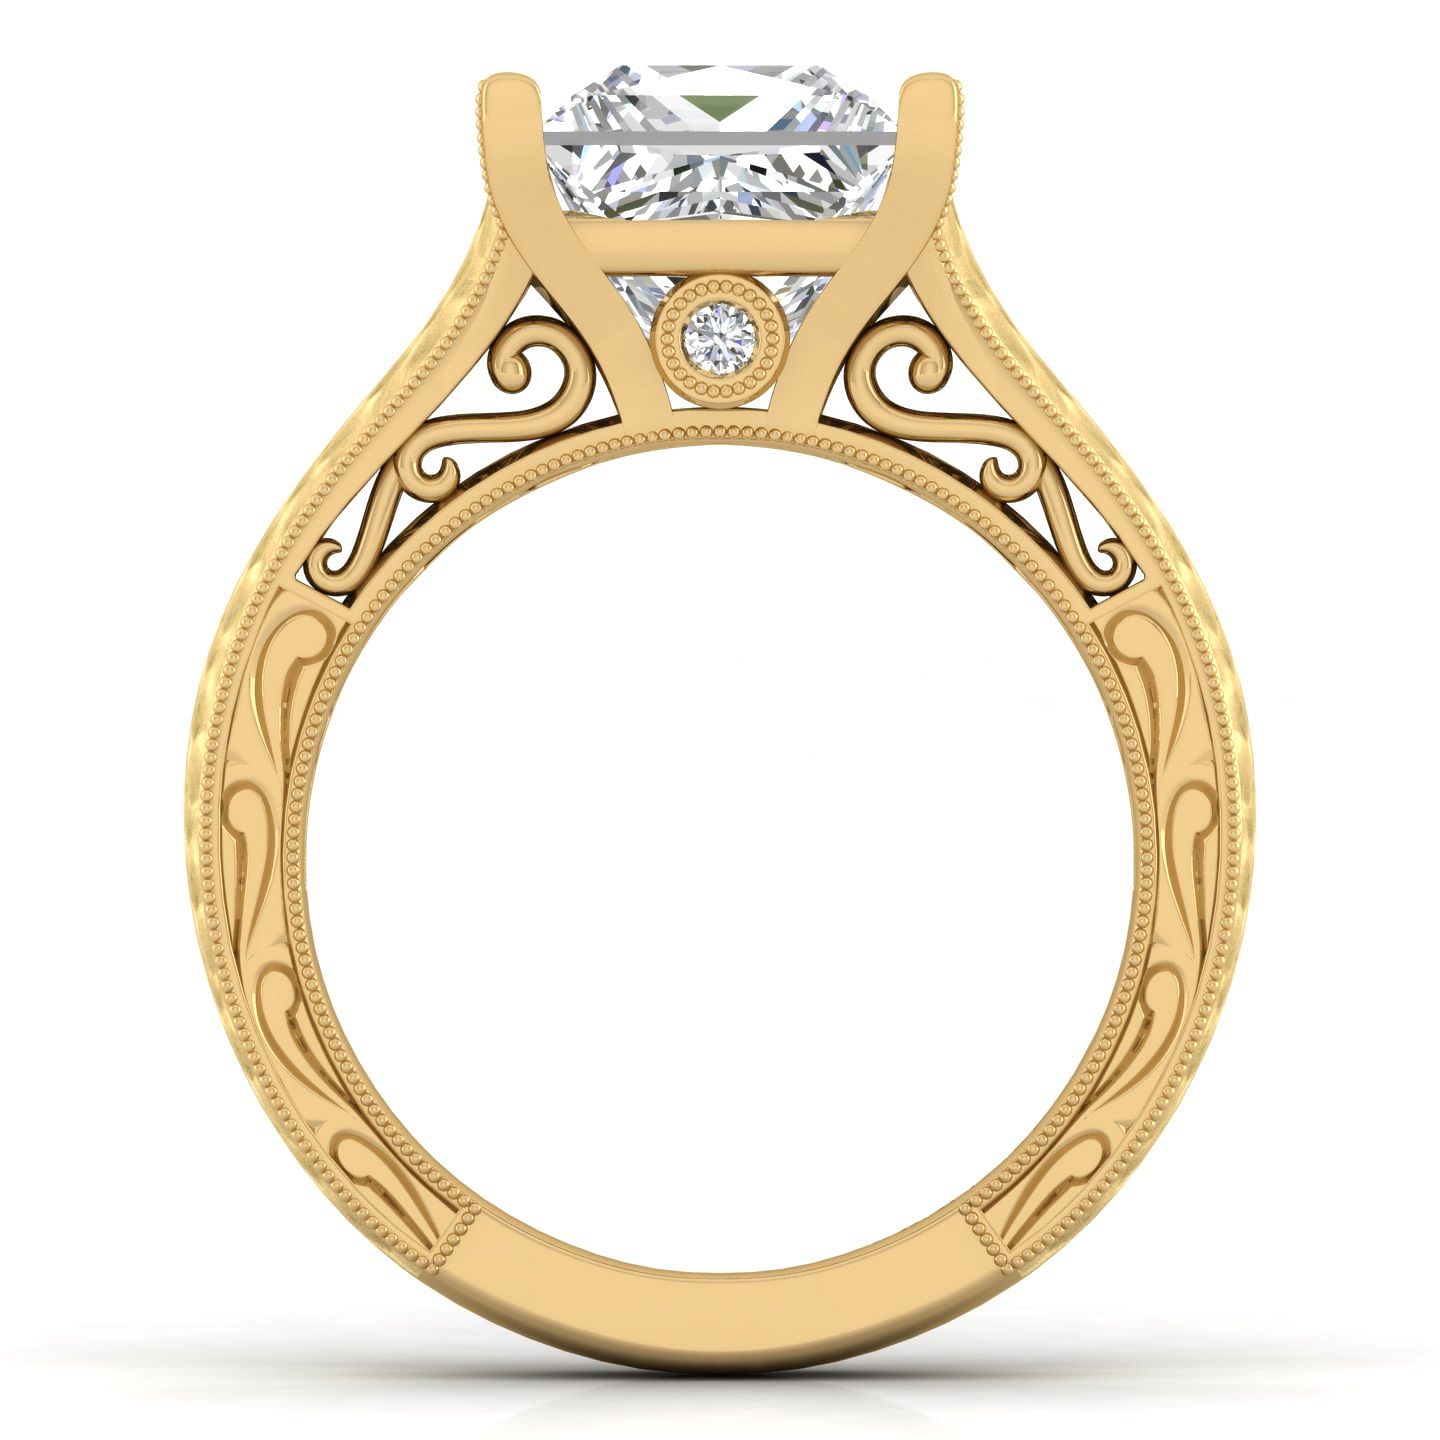 Vintage Inspired 14K Yellow Gold Princess Cut Diamond Engagement Ring